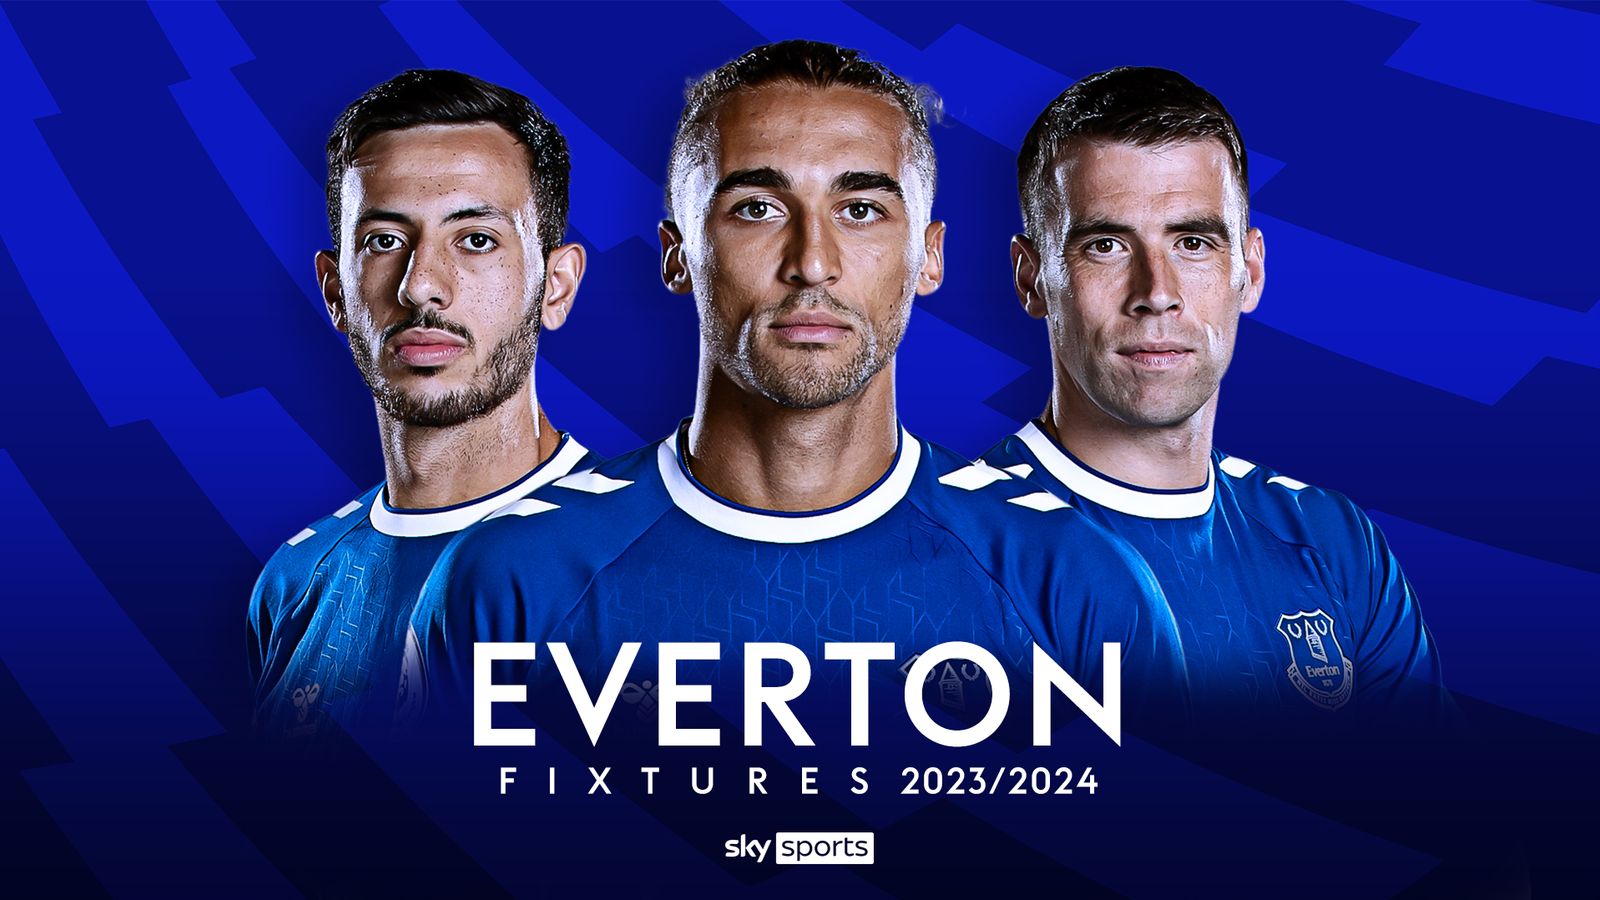 Everton Premier League 2023/24 fixtures and schedule Football News